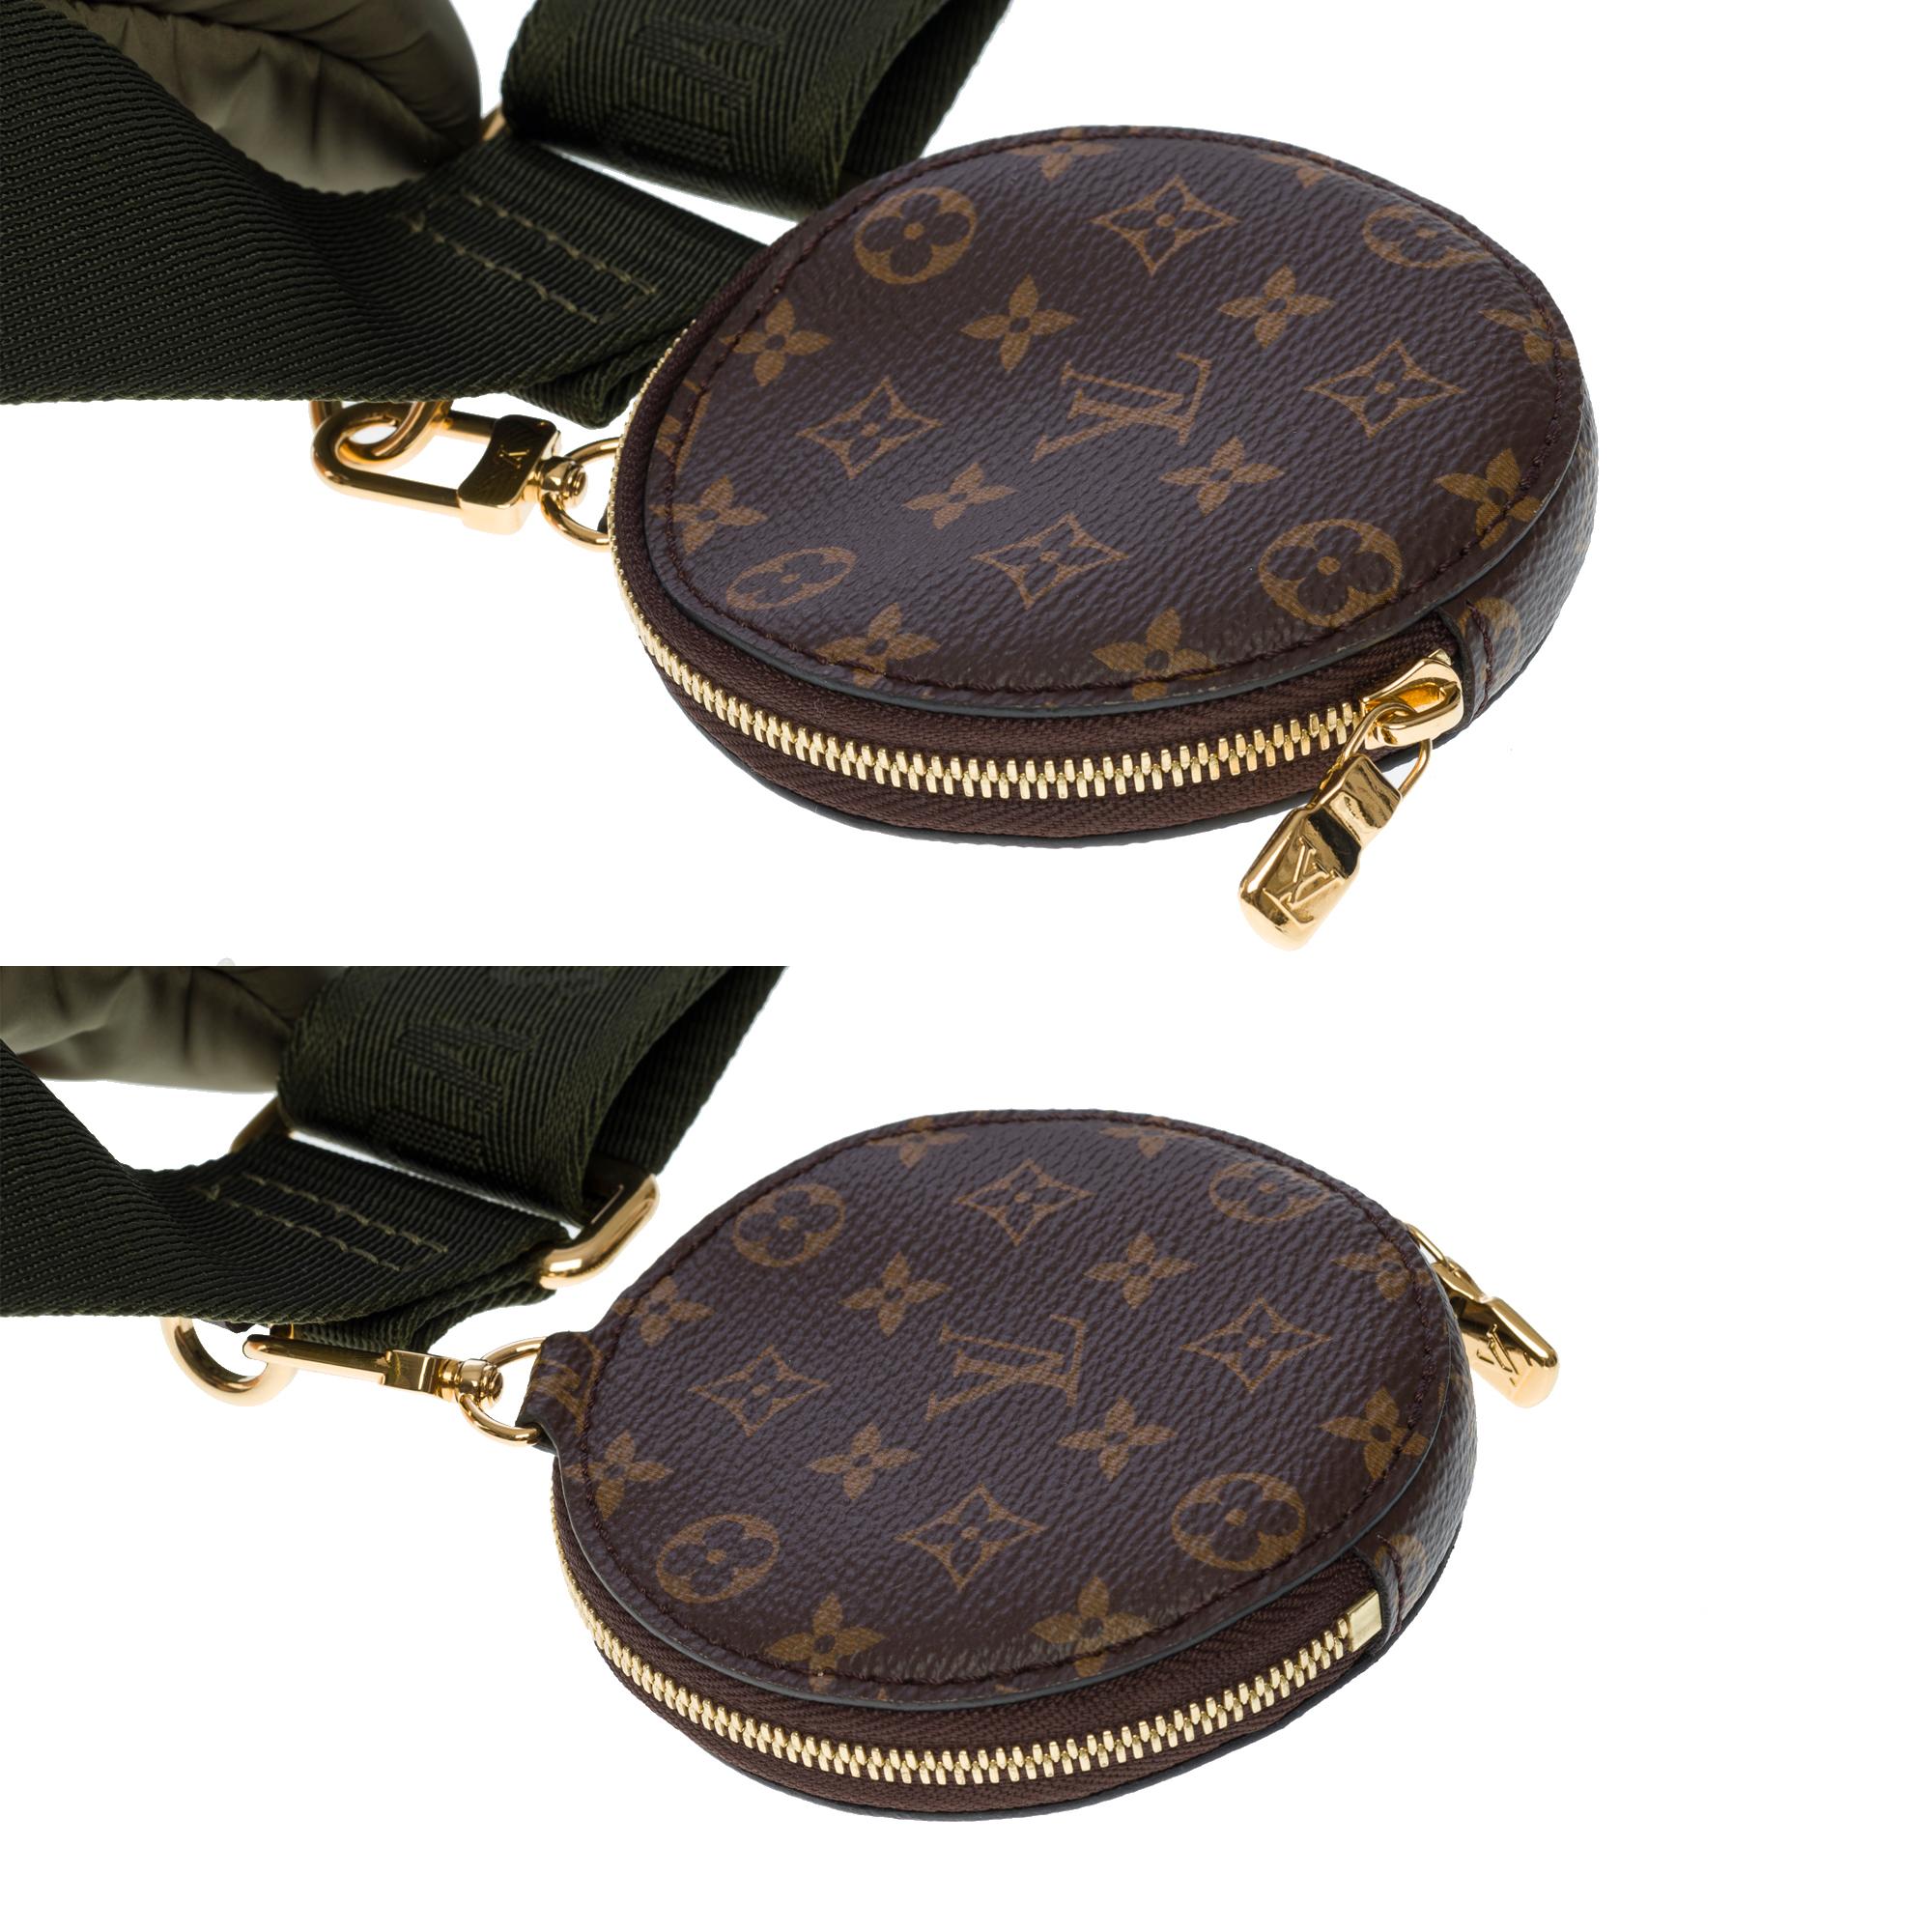 New Louis Vuitton Pillow Maxi Pochette shoulder bag in khaki/Beige nylon, GHW For Sale 9